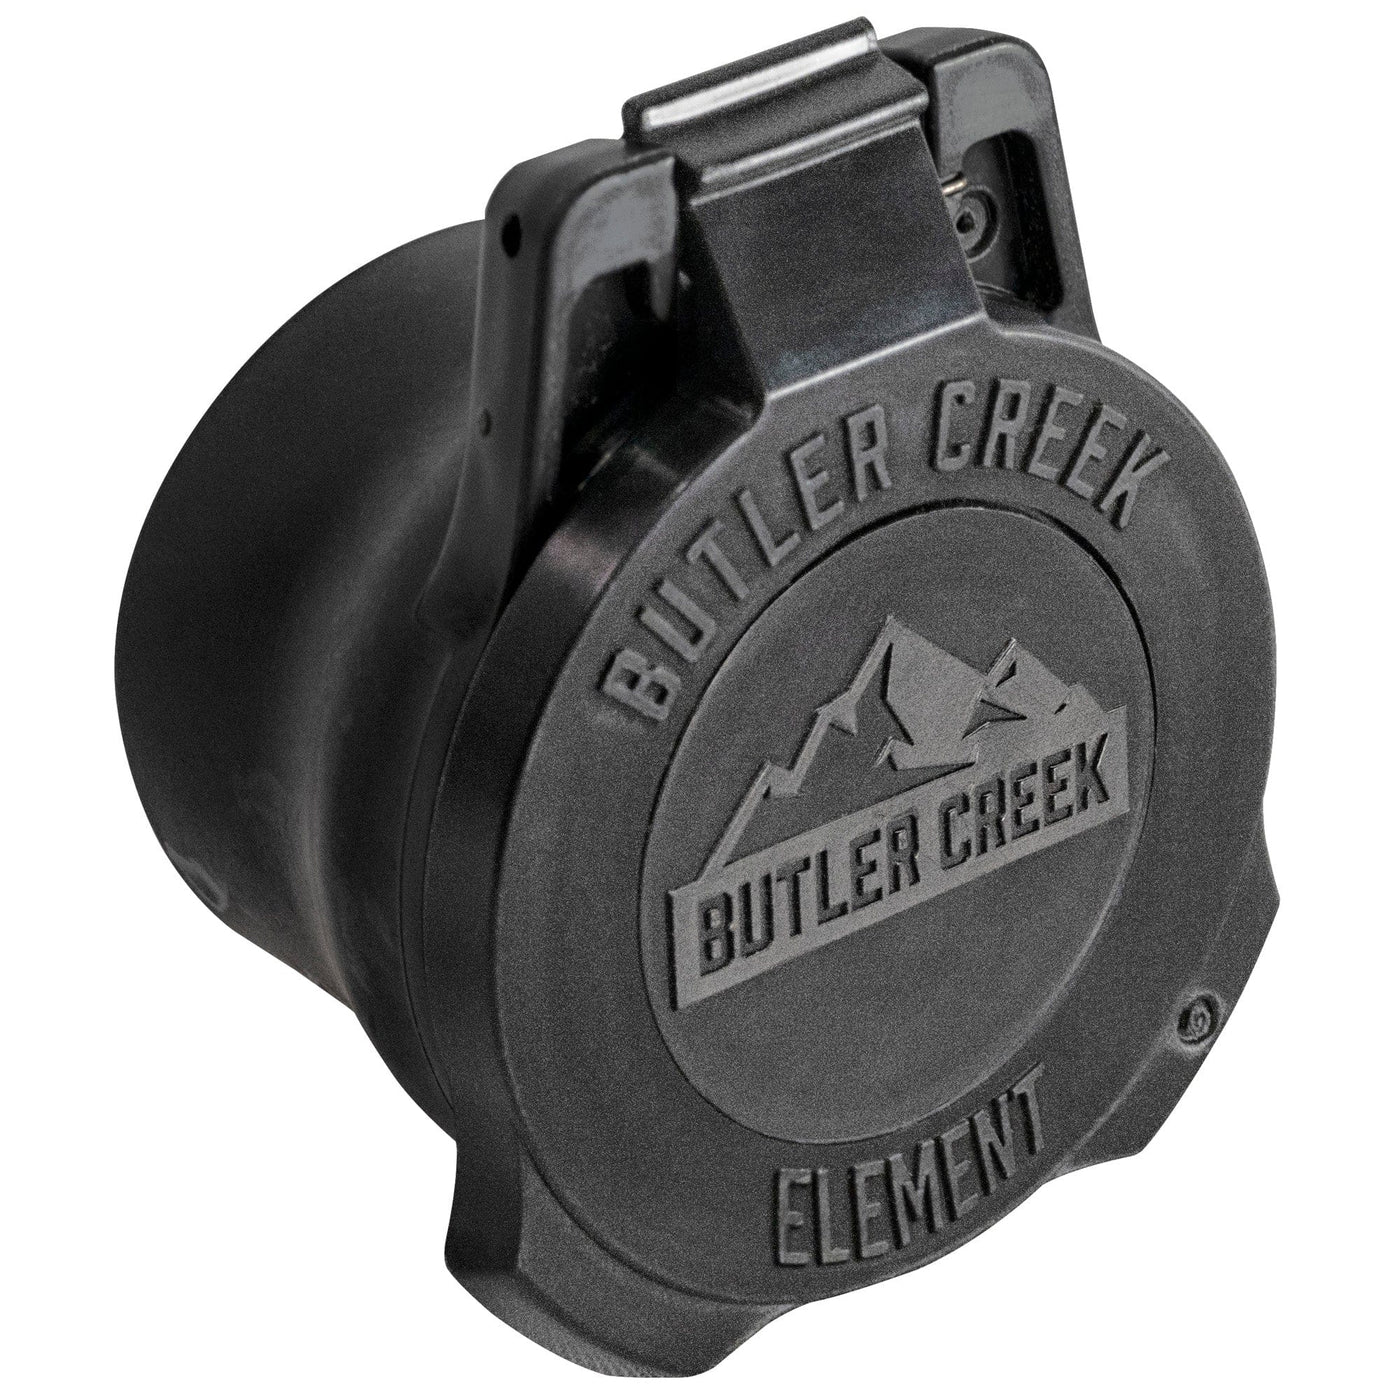 Butler Creek Butler Creek Element Scope Cap Black Objective 44mm Scope Mounts